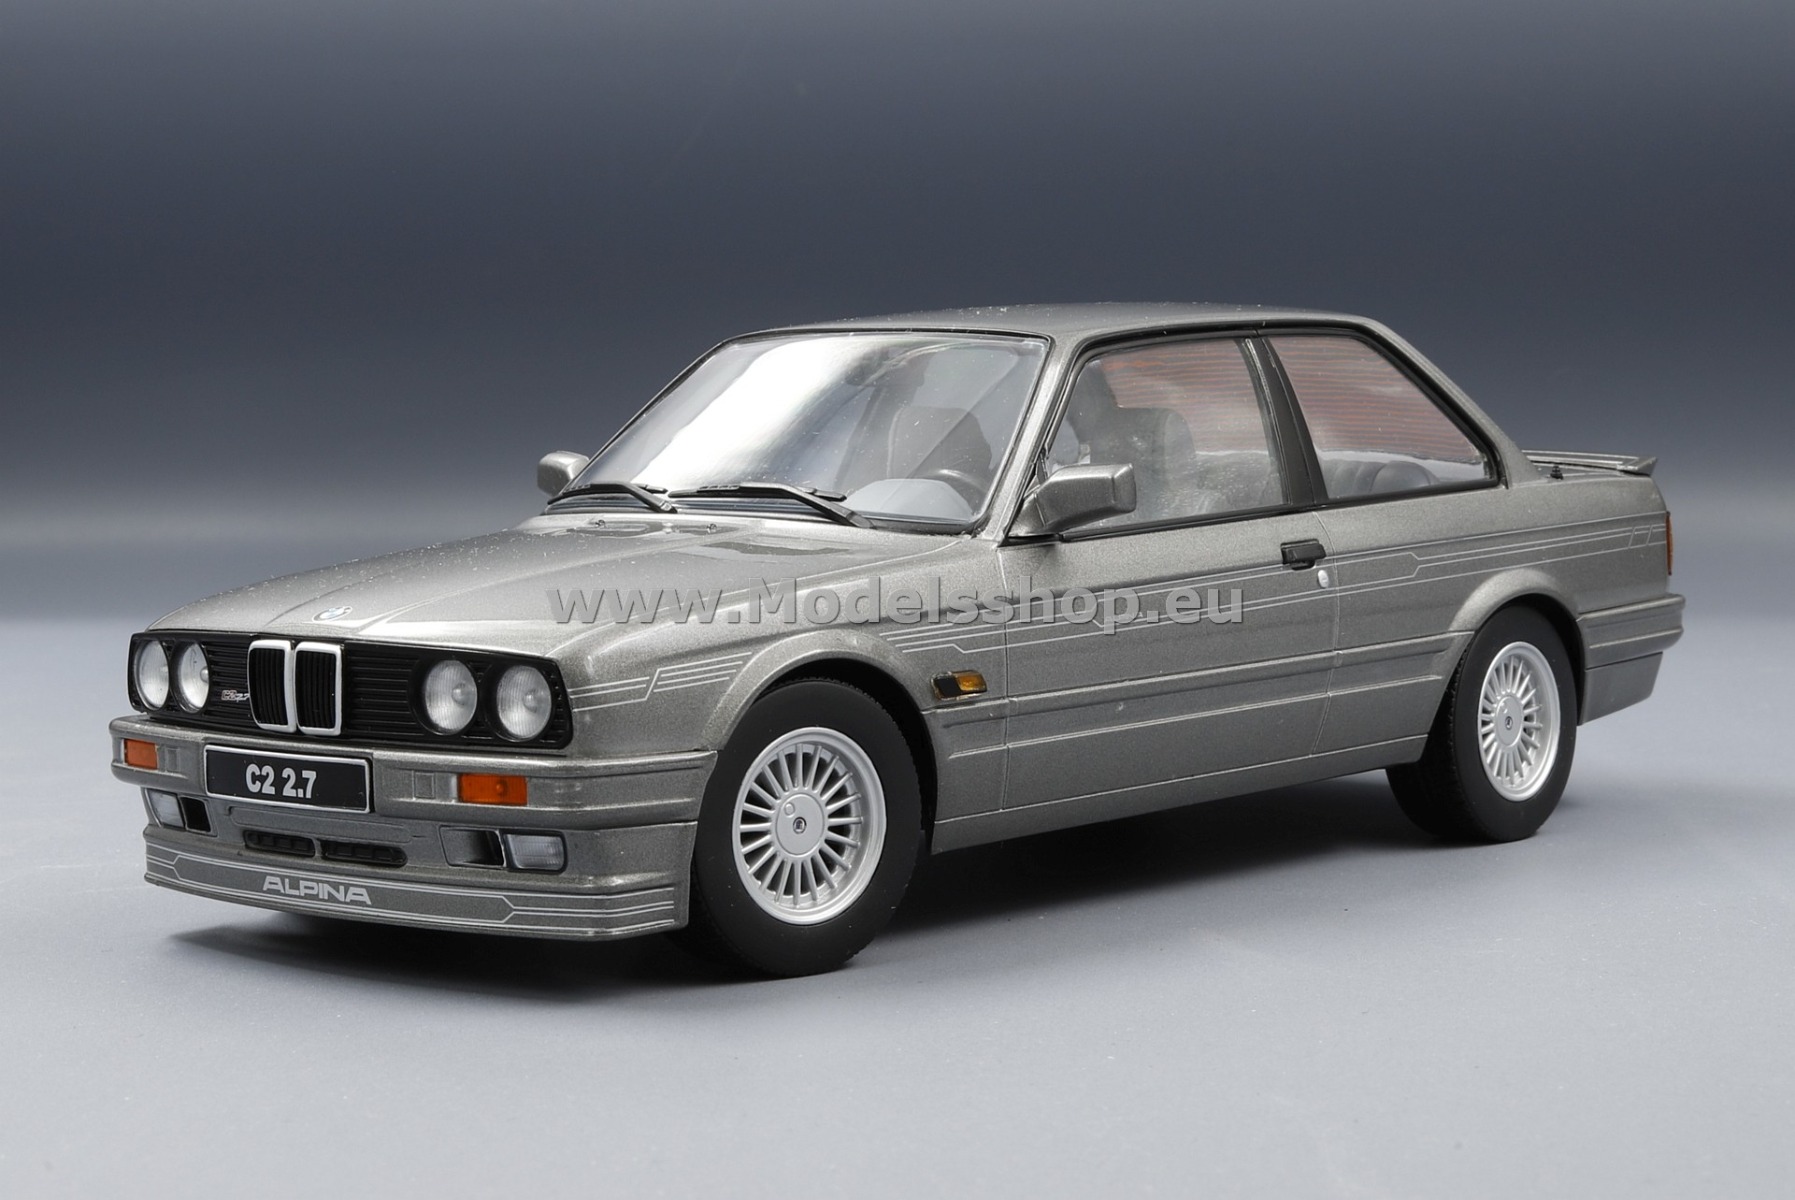 BMW Alpina C2 2.7 E30, 1988 /grey - metallic/